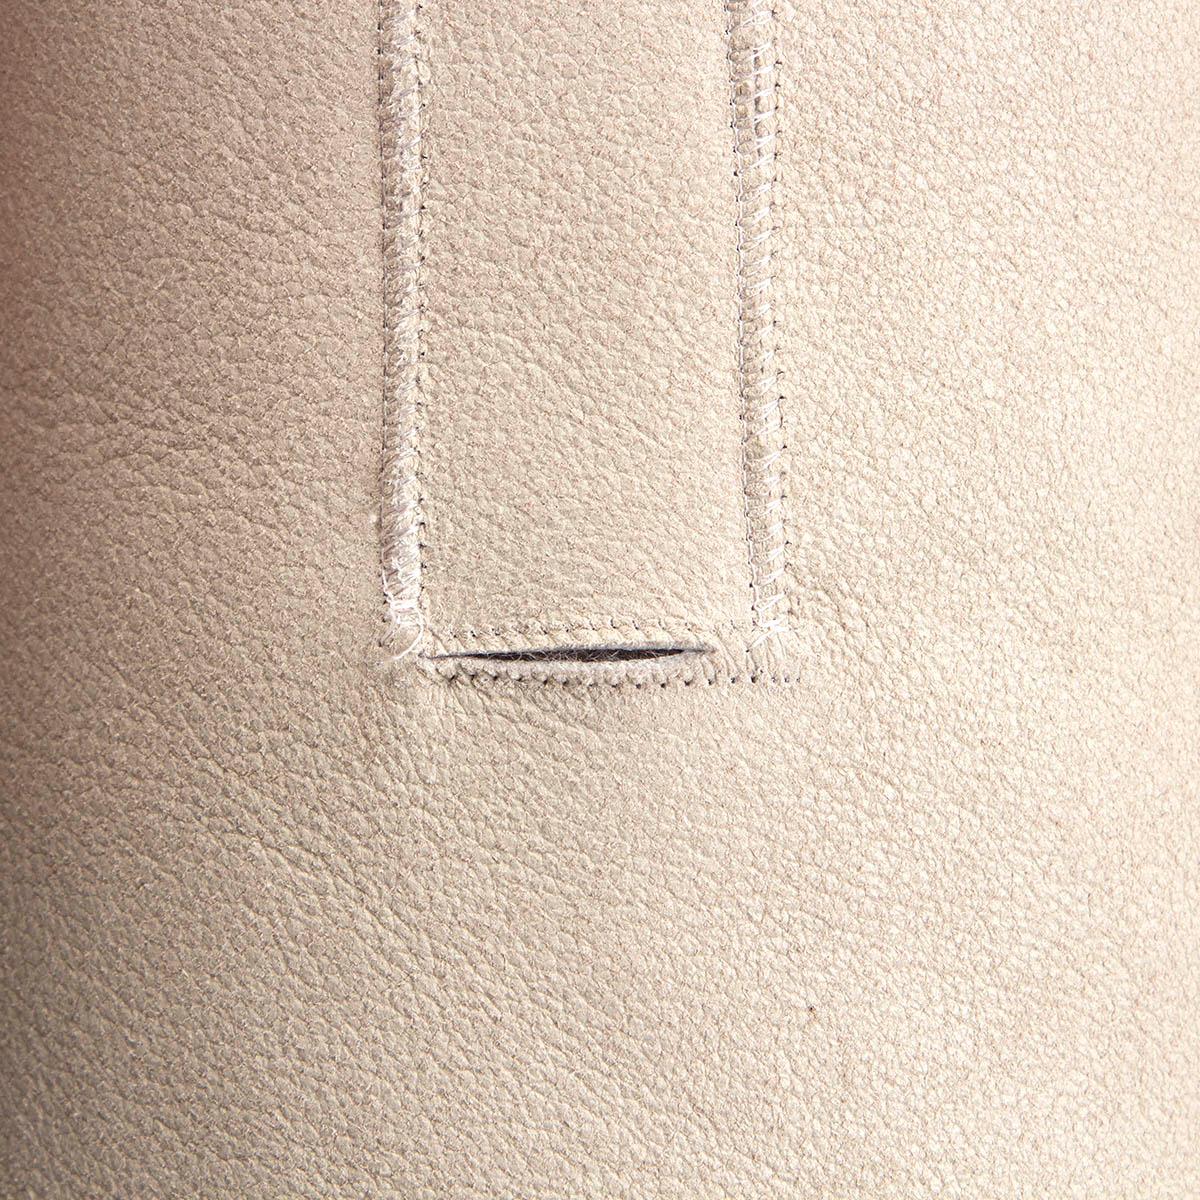 ALEXANDER MCQUEEN beige & pink suede 2017 SHEARLING Coat Jacket 40 S In Good Condition For Sale In Zürich, CH